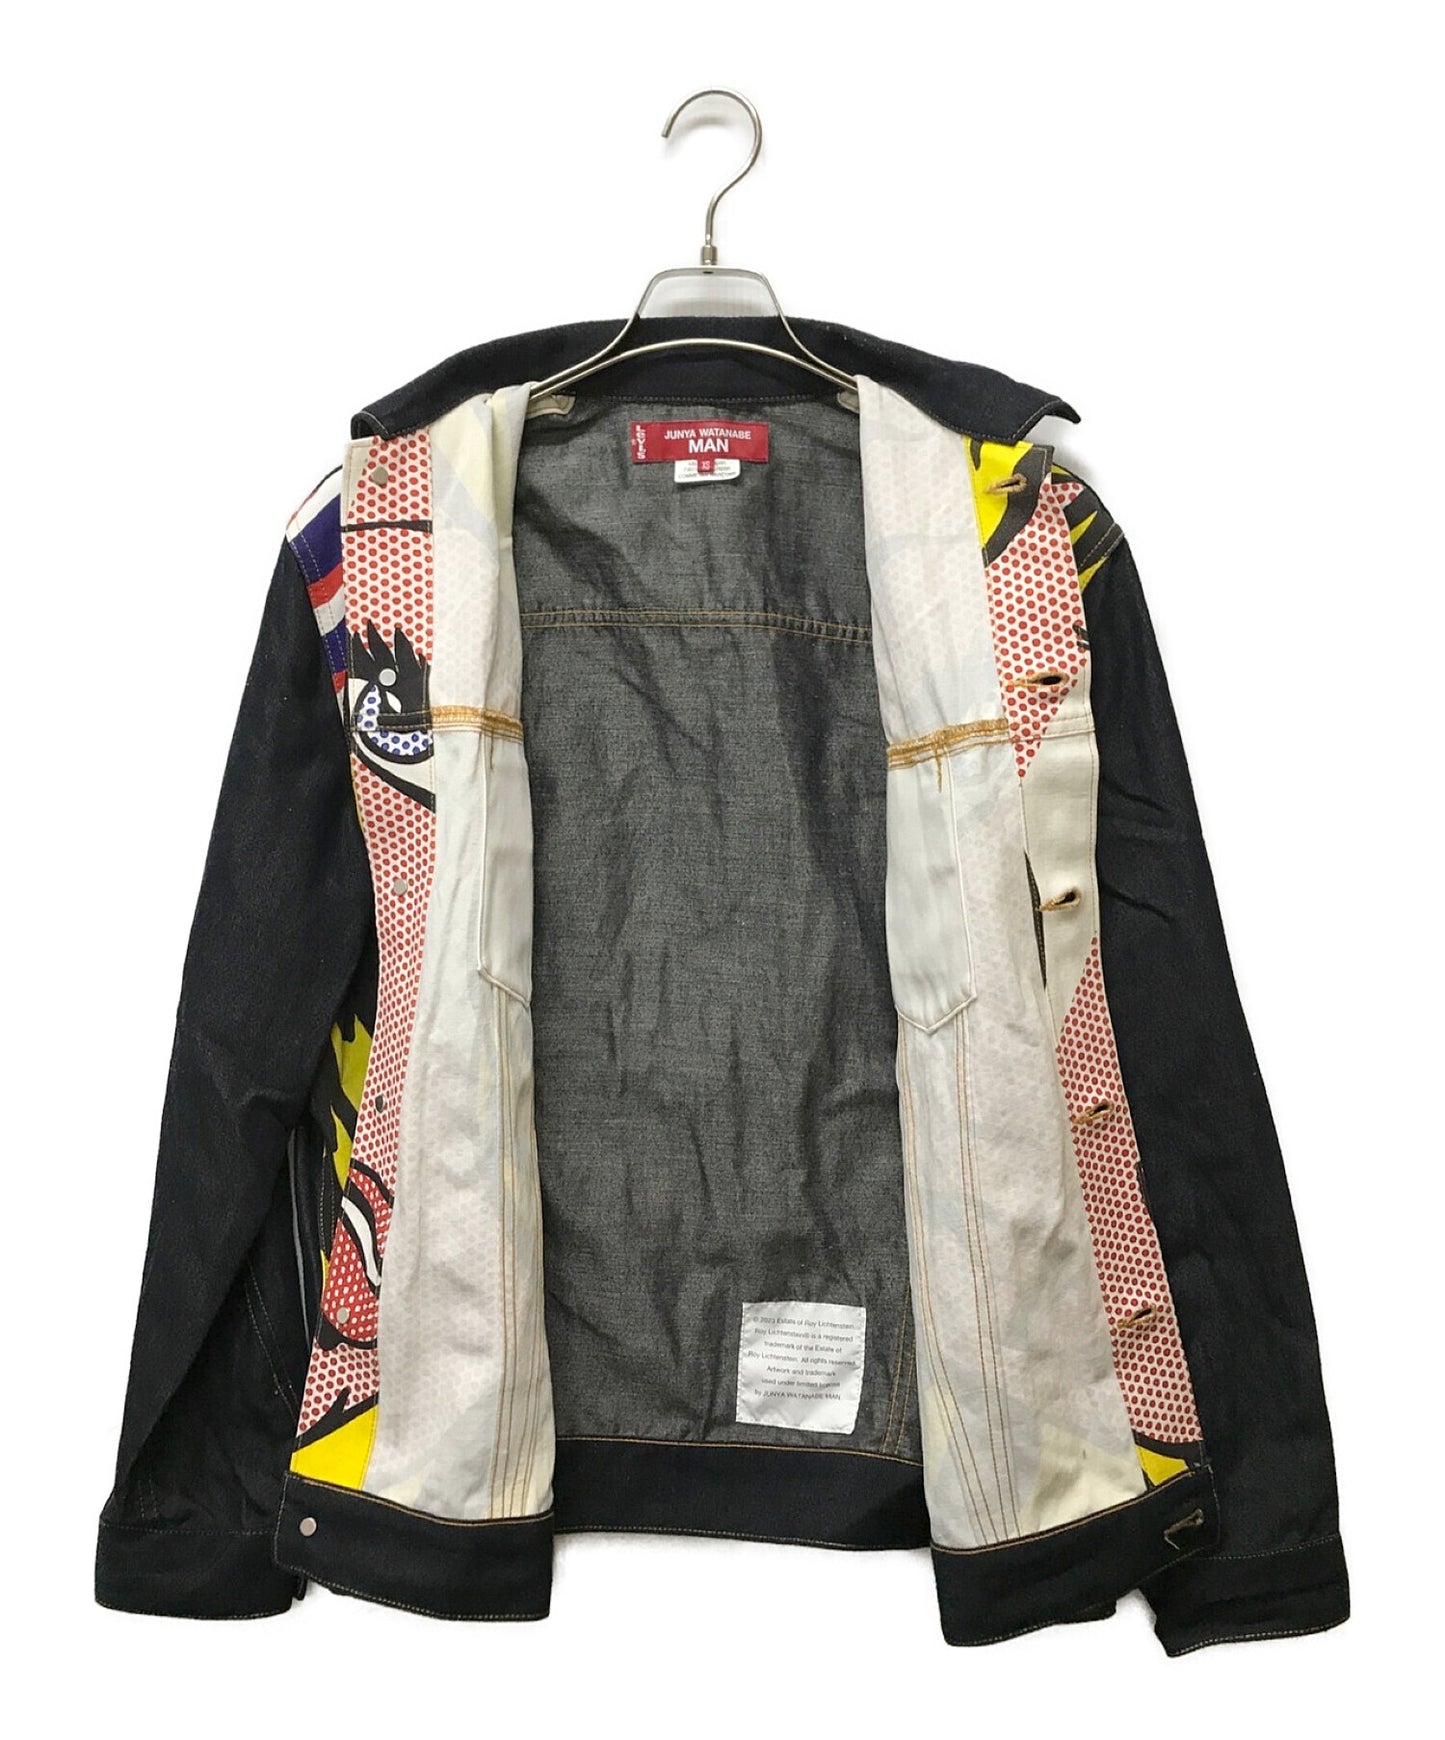 Comme des Garcons Junya Watanabe Man Collaboration Print Denim Jacket WK-J203 AD2022